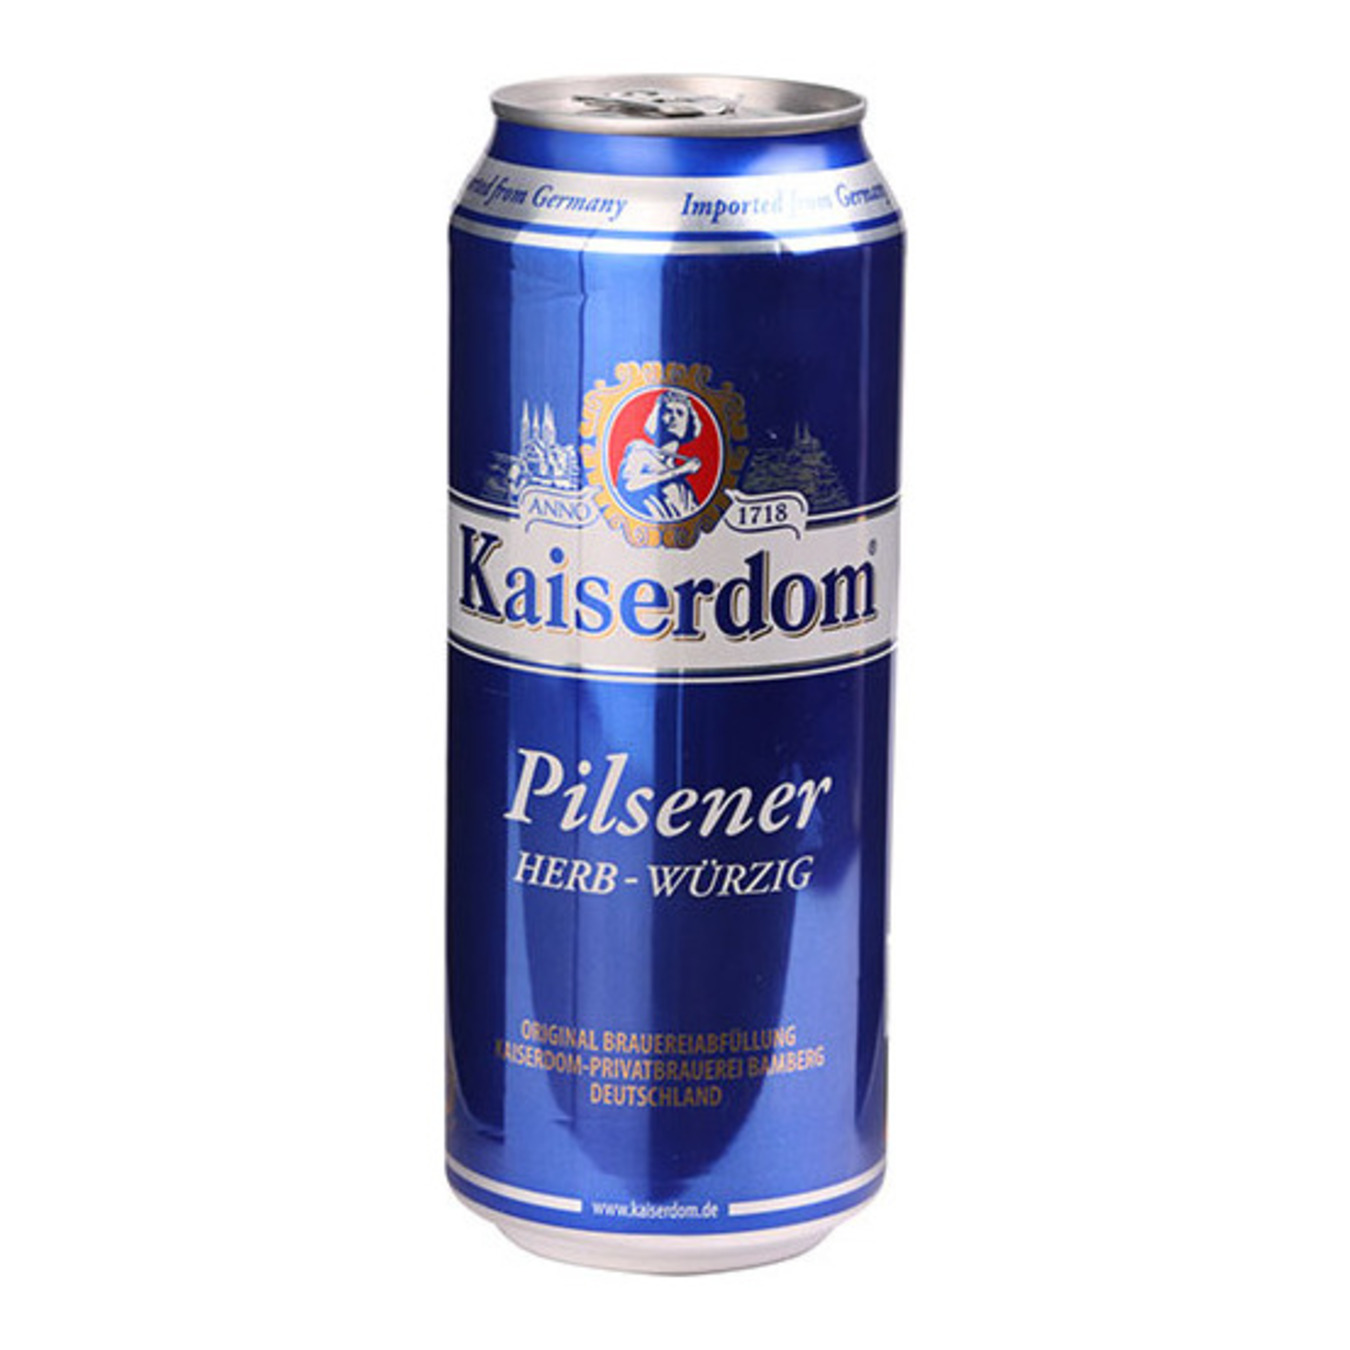 Kaiserdom Pilsener Herb-Wurzig light beer 4,7 % 0,5l